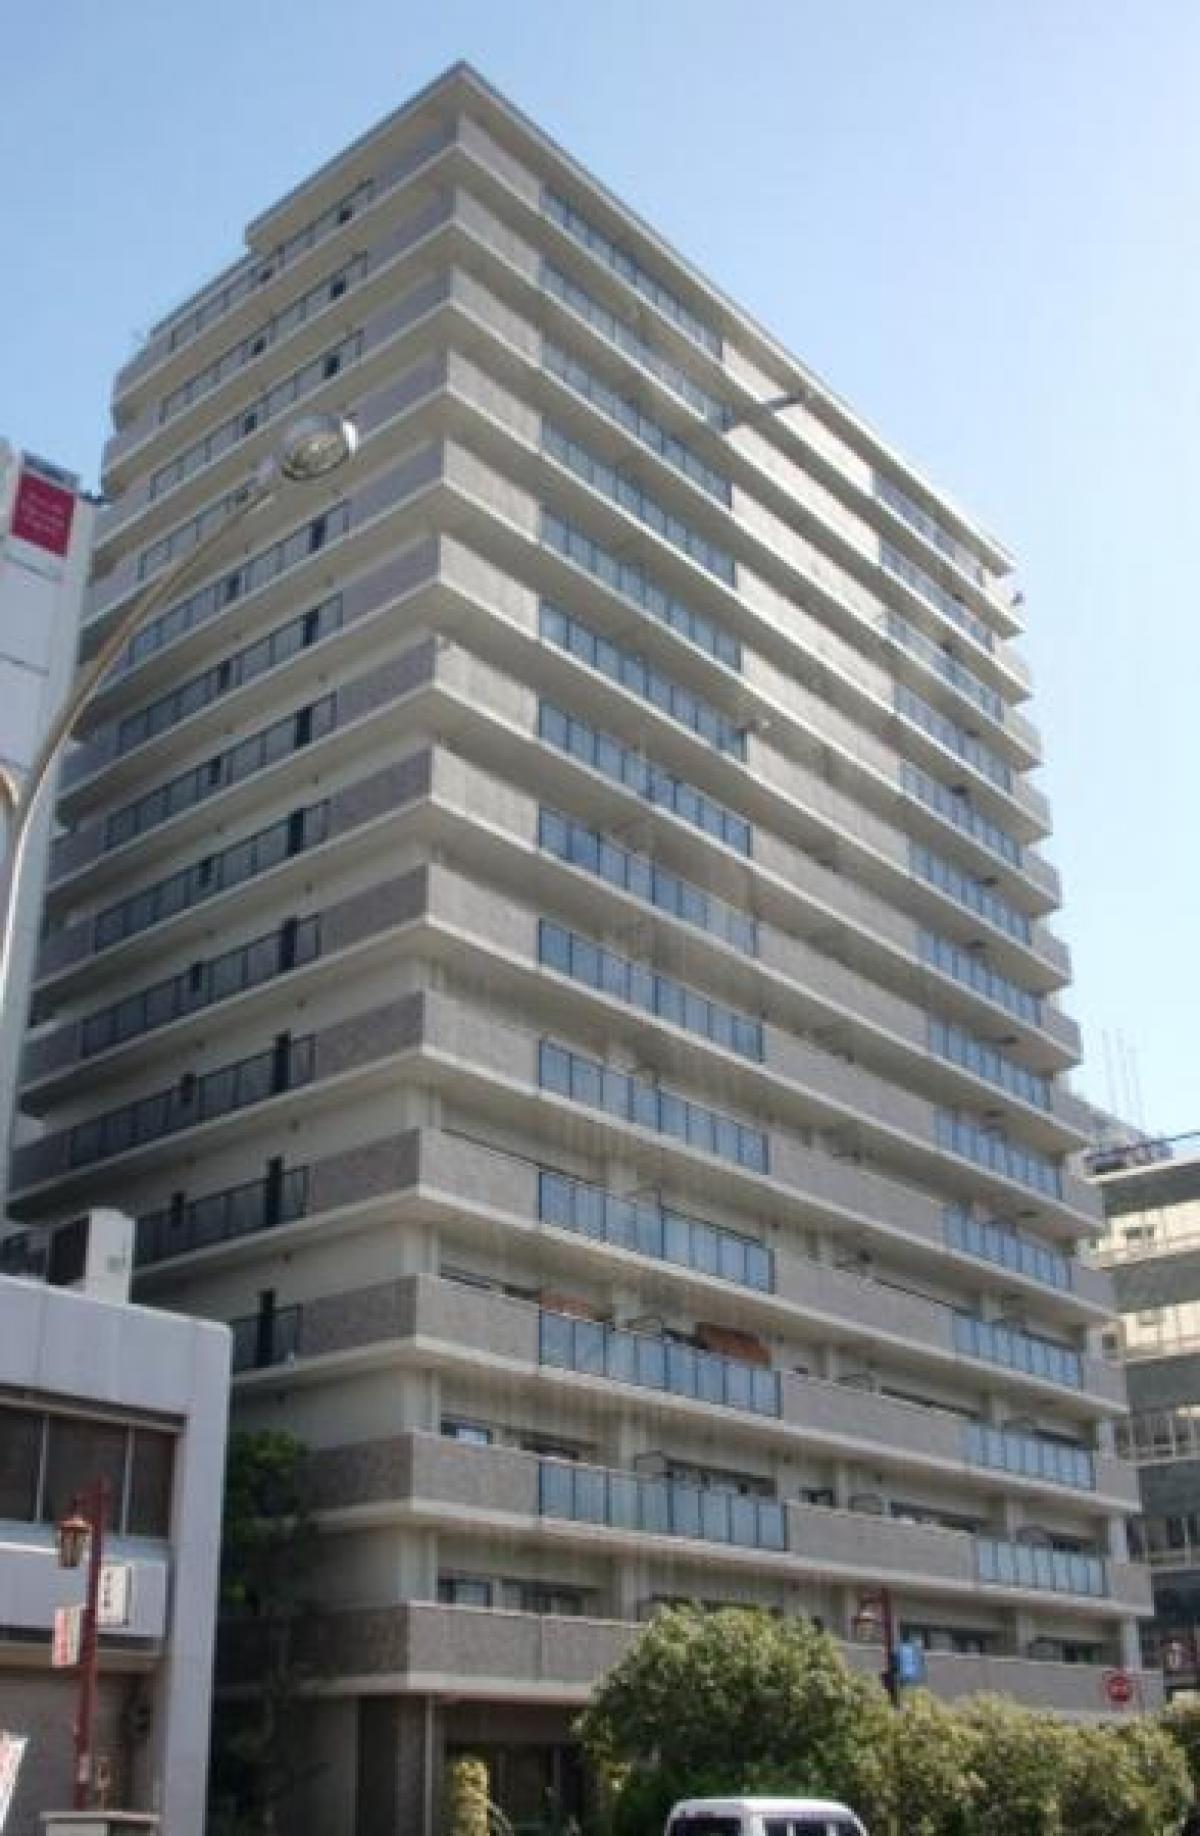 Picture of Apartment For Sale in Higashiosaka Shi, Osaka, Japan